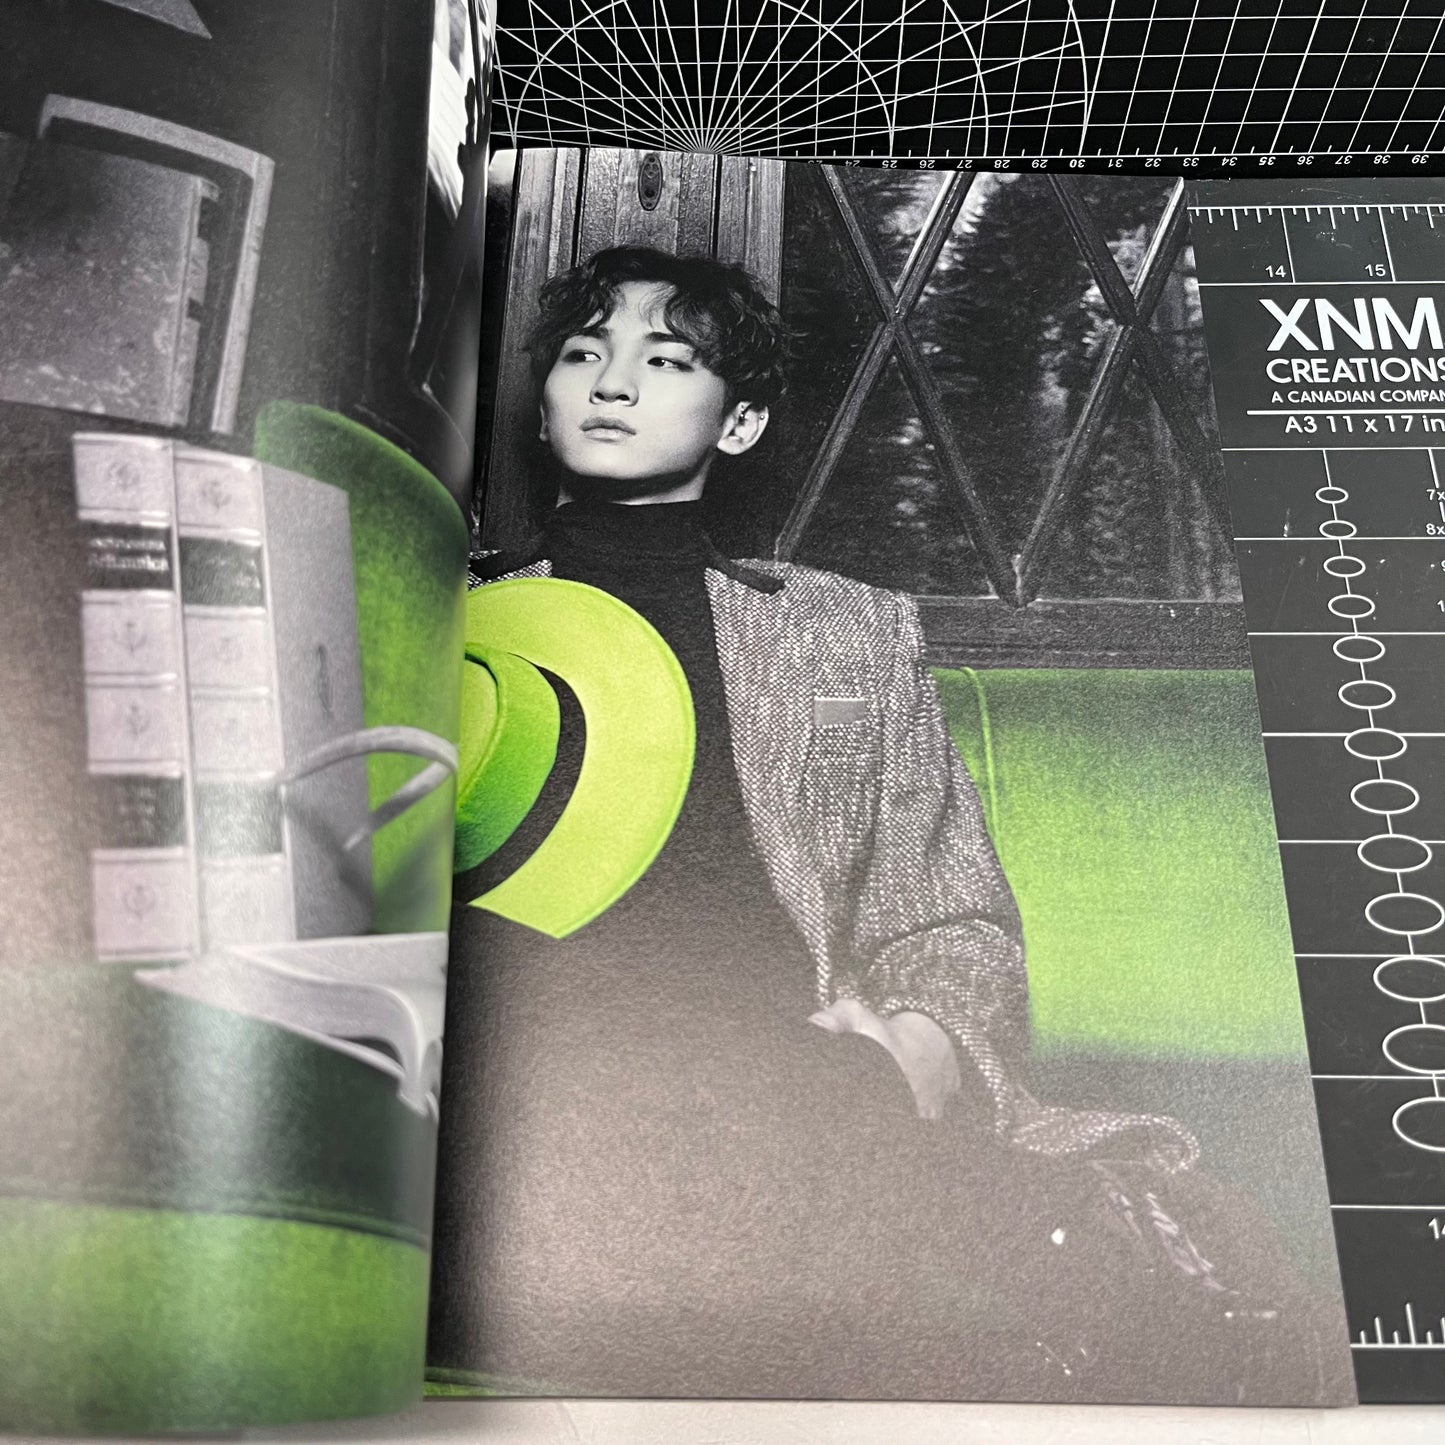 SHINee World 2016 DxDxD Official Merchandise - Key Photobook